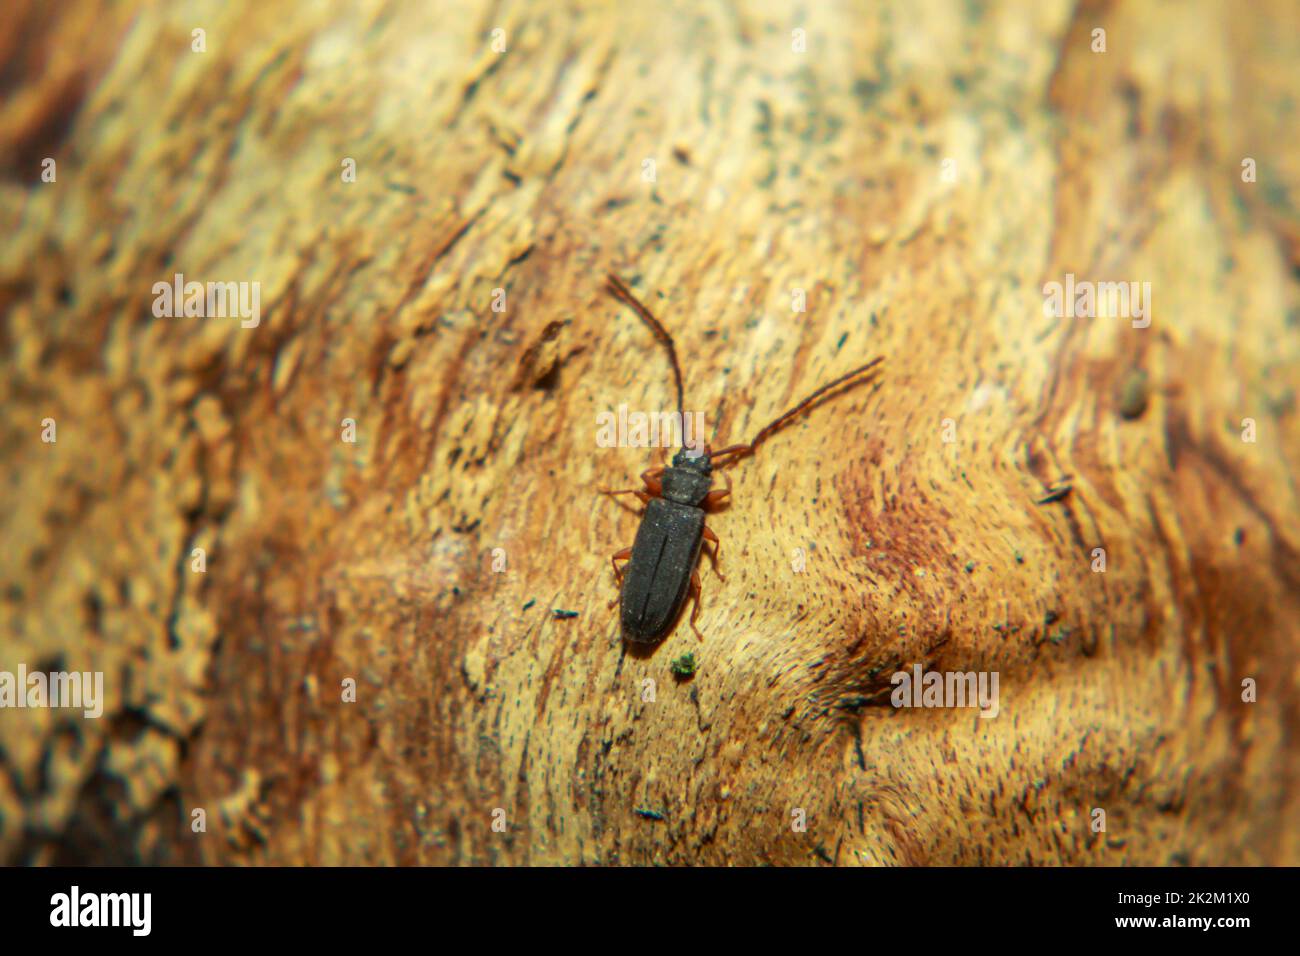 Close-up of a long-horned predatory plate beetle, Uleiota planatus on a piece of bark, wood. Stock Photo